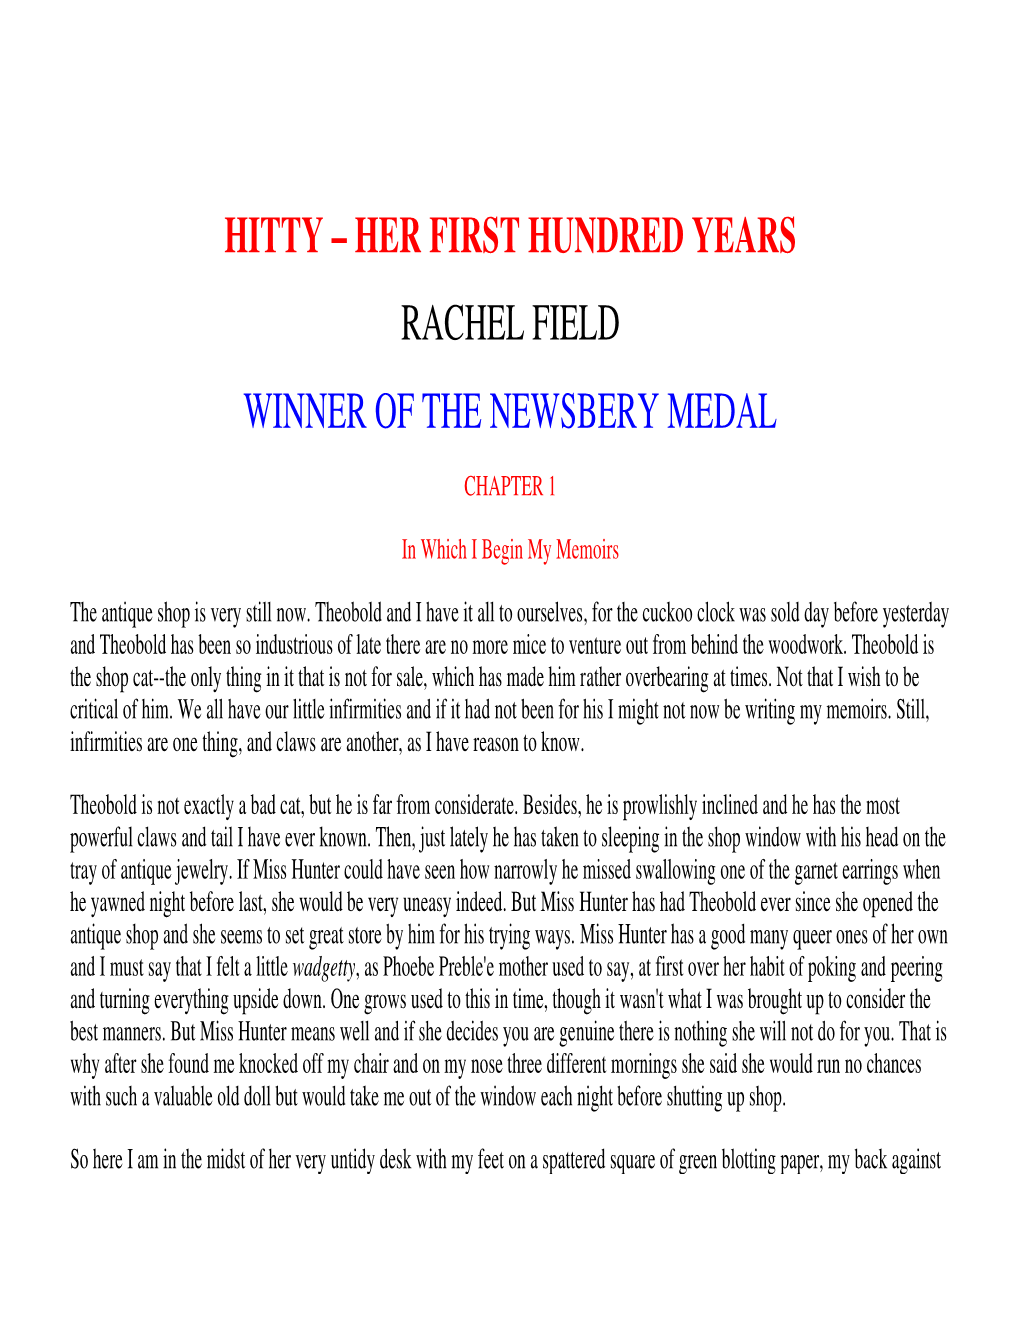 Hitty – Her First Hundred Years Rachel Field Winner of the Newsbery Medal